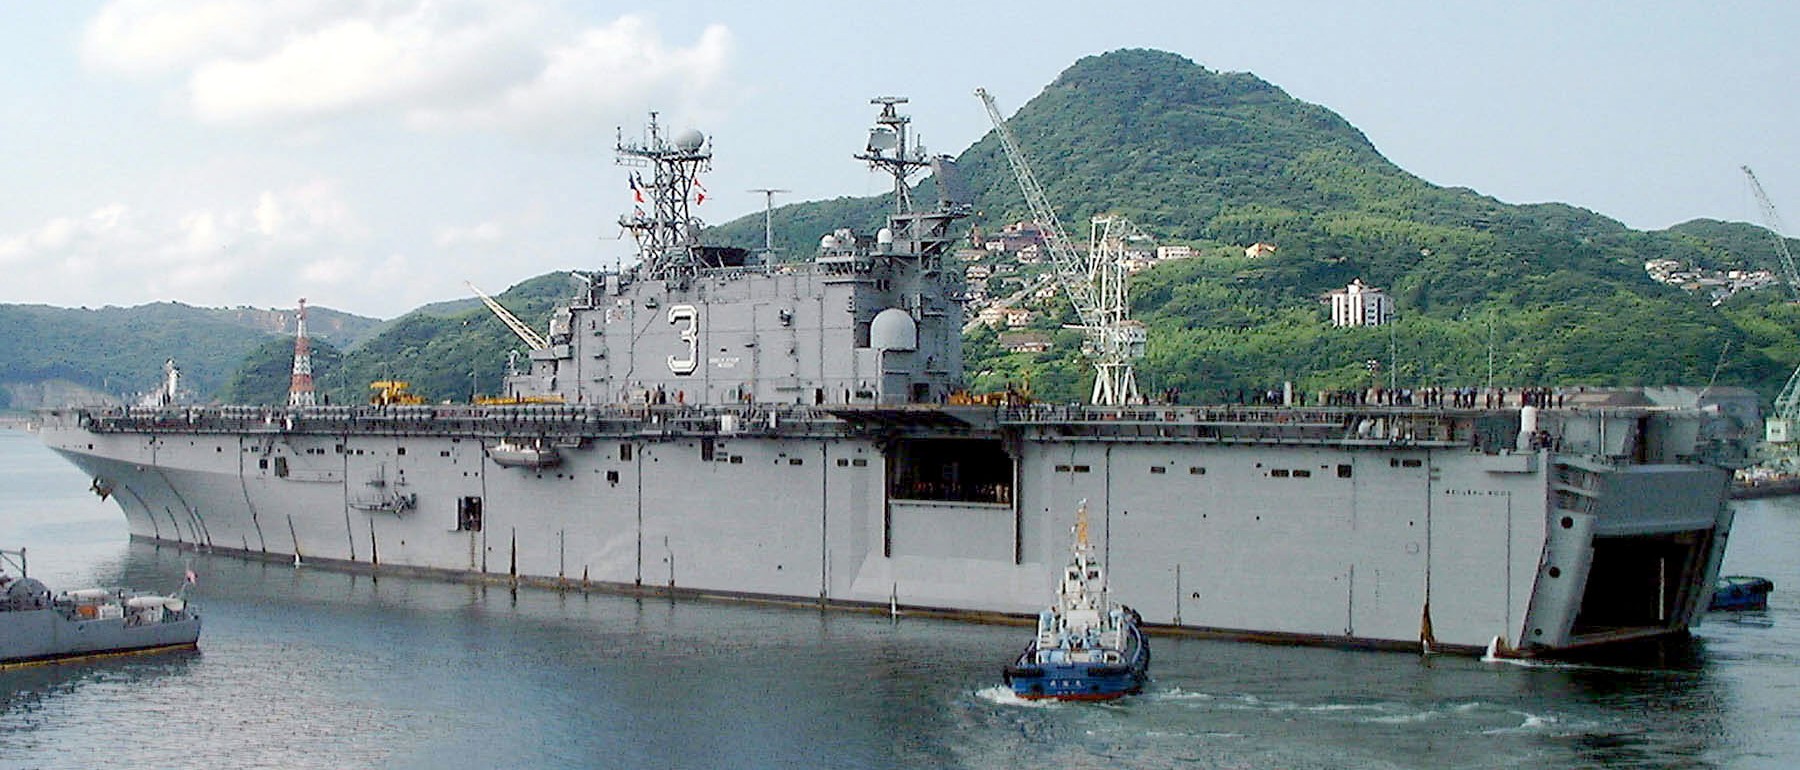 lha-3 uss belleau wood tarawa class amphibious assault ship us navy 02 sasebo japan